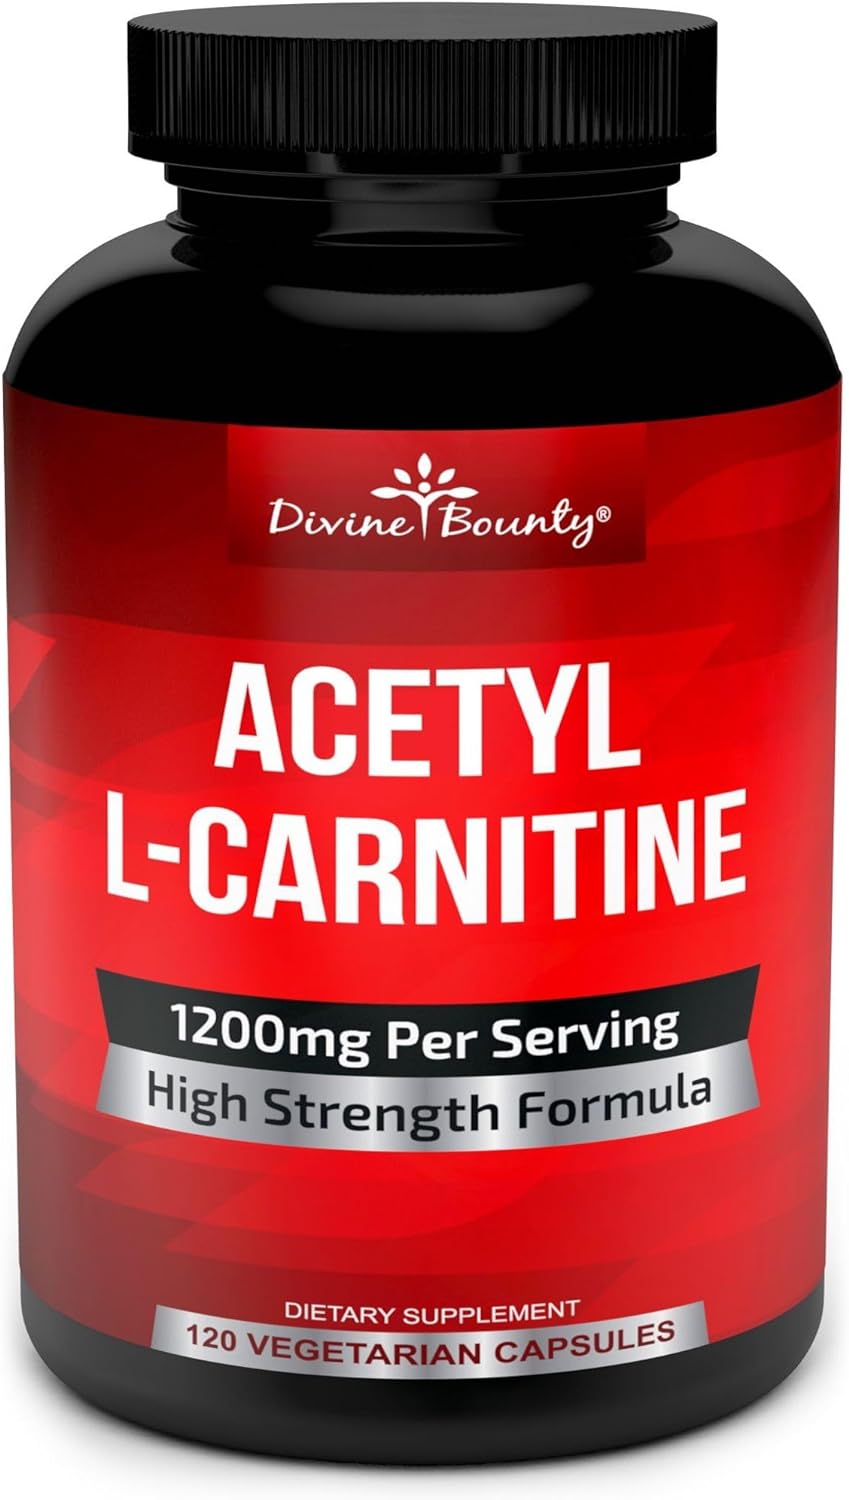 Divine Bounty Acetyl L-Carnitine Capsules 1200mg Per Serving - L Carnitine Supplement 120 Vegetarian Capsules